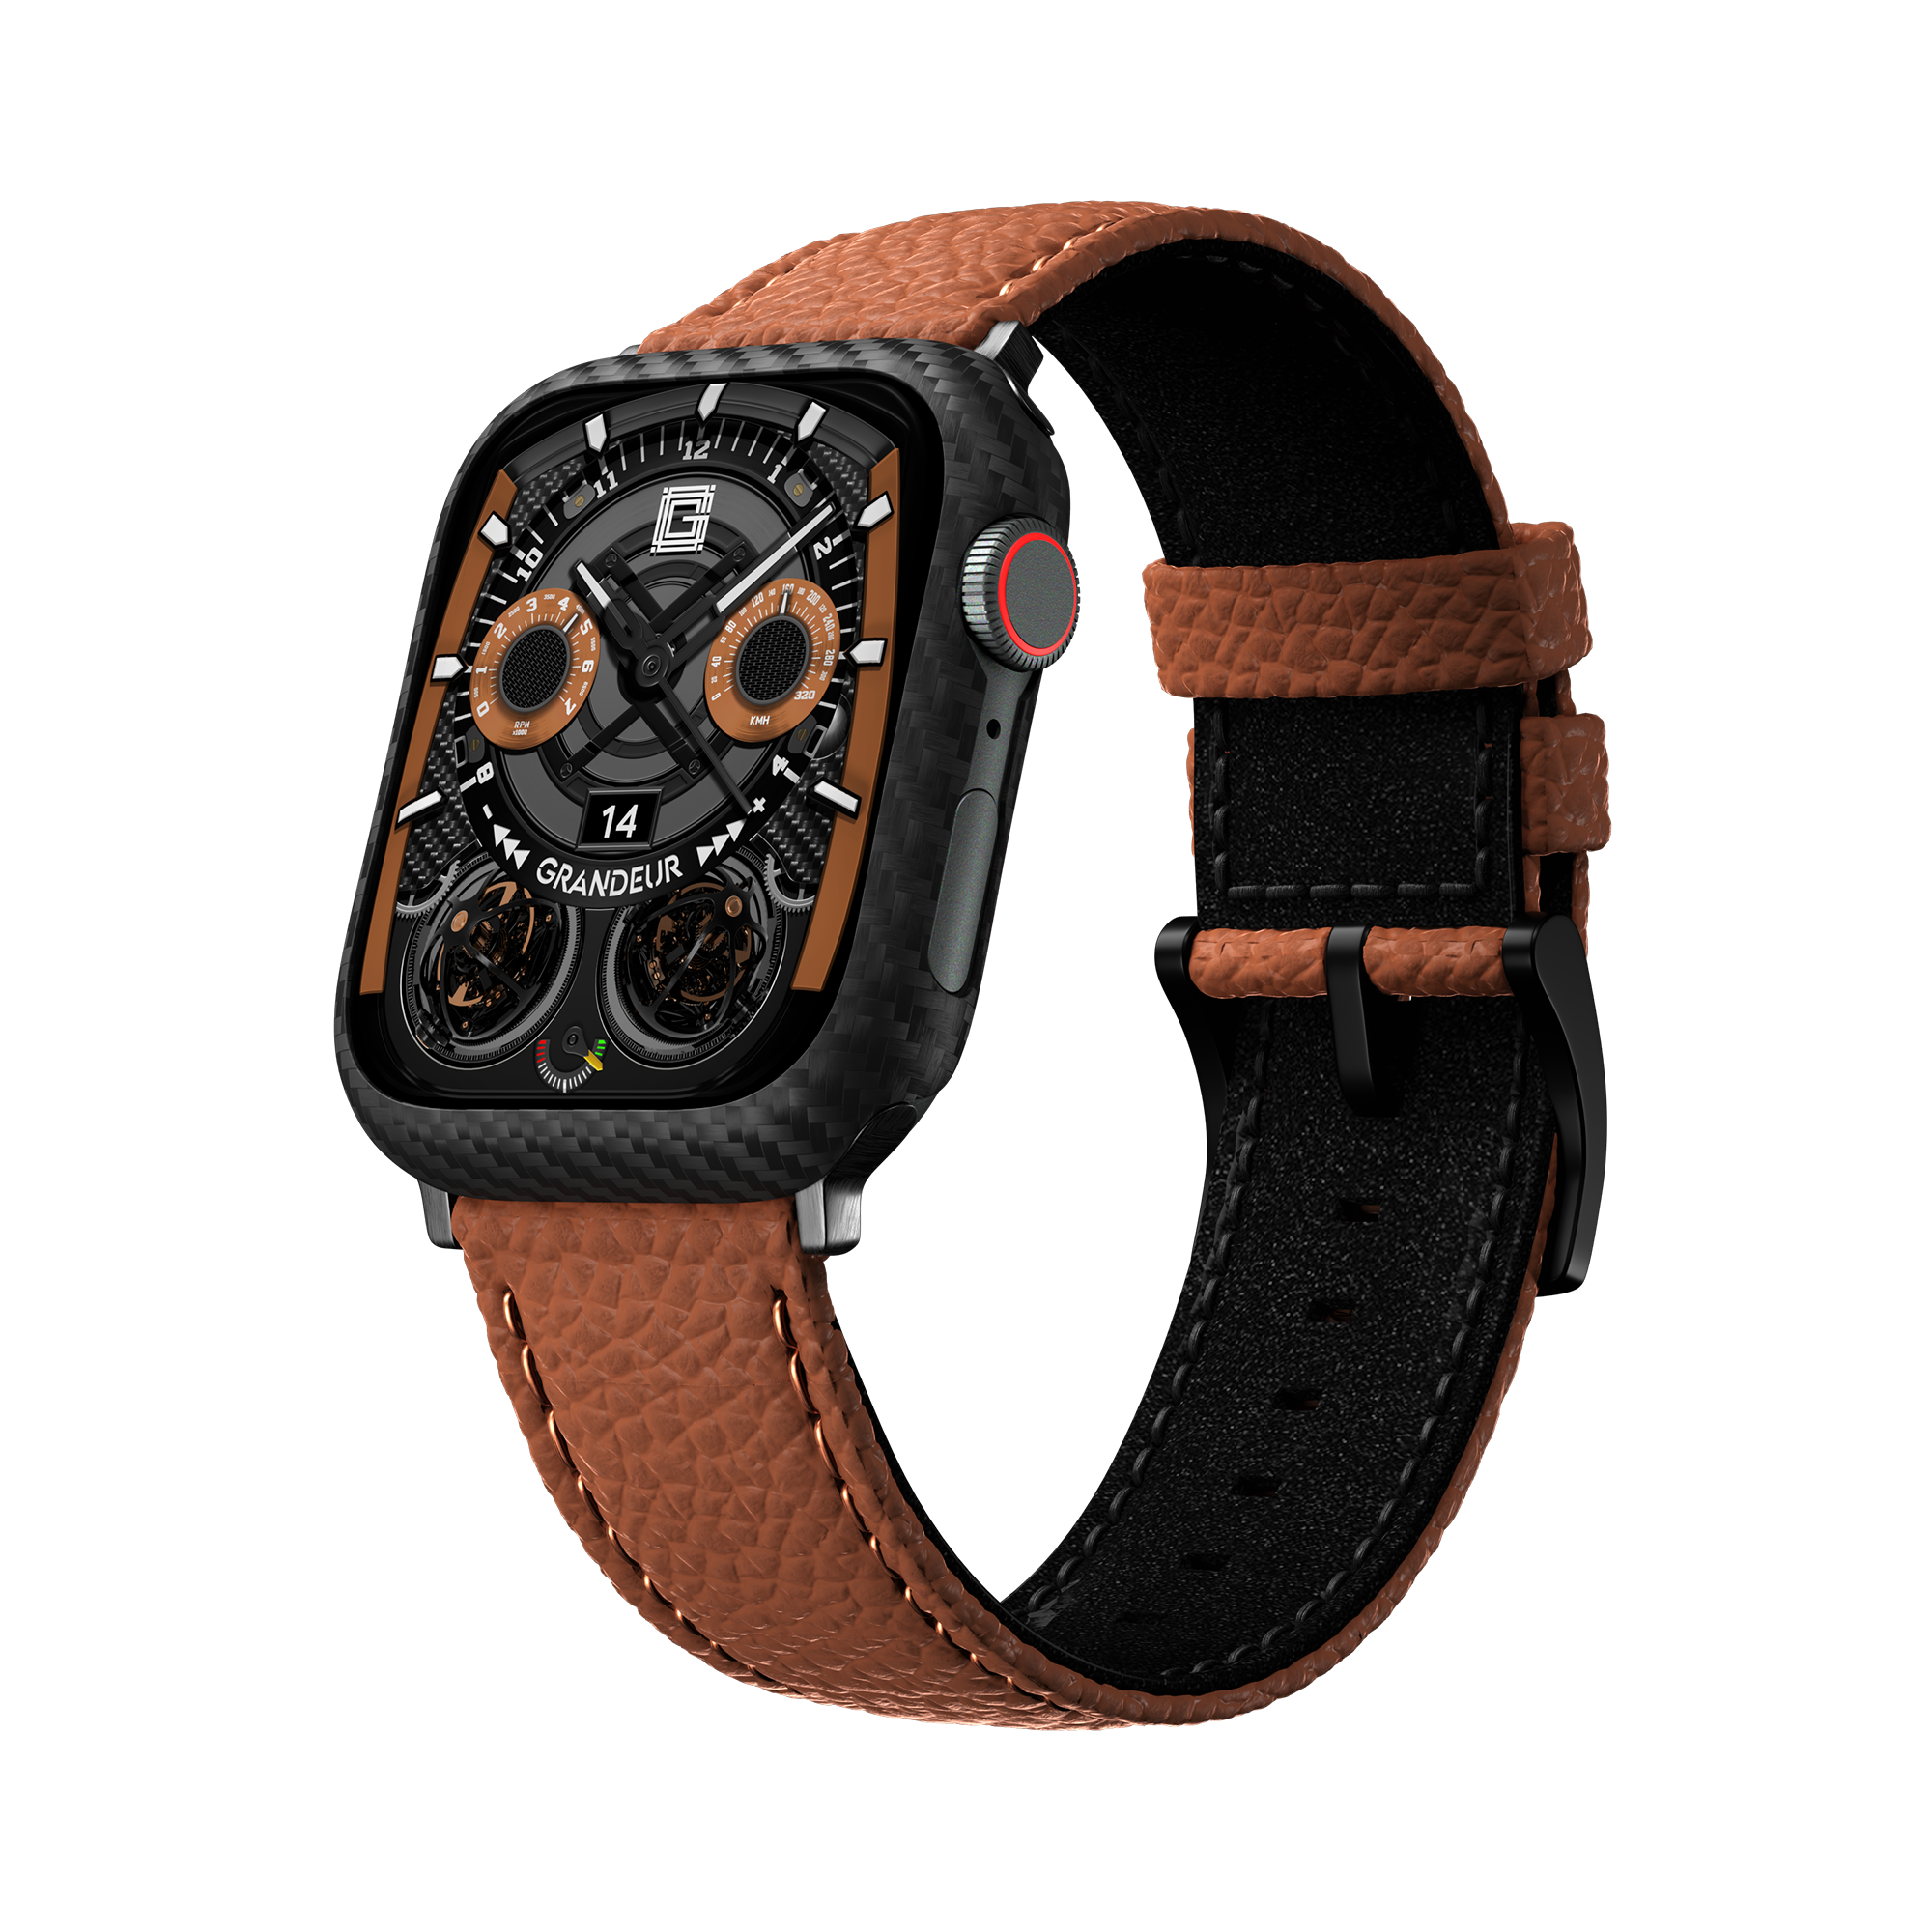 Togo Leather Apple Watch Strap - elcuzn brown